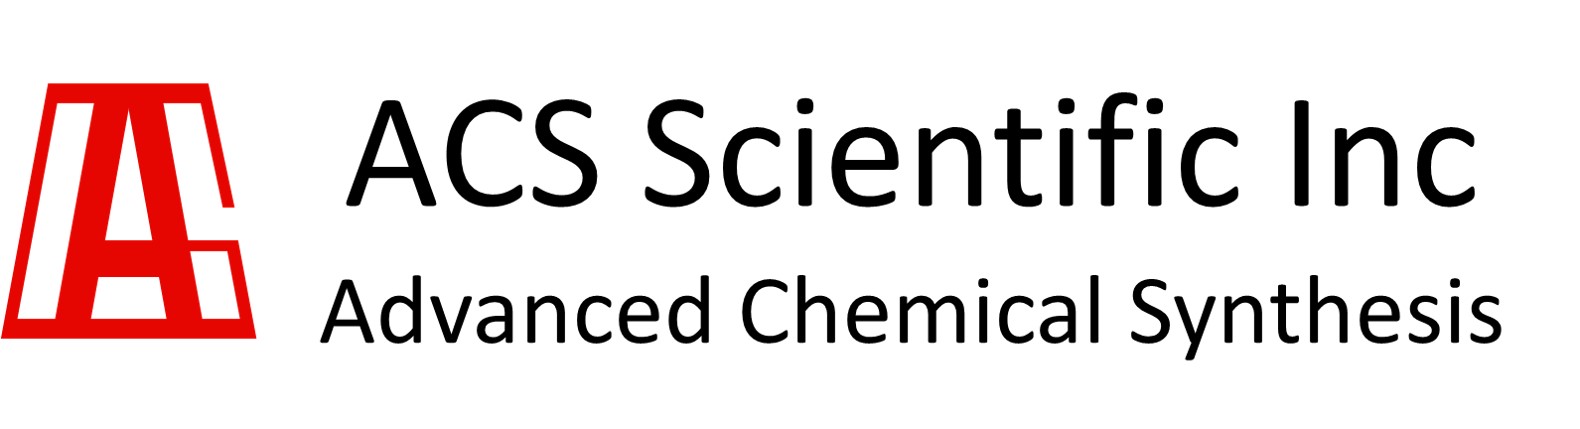 ACSSCI logo